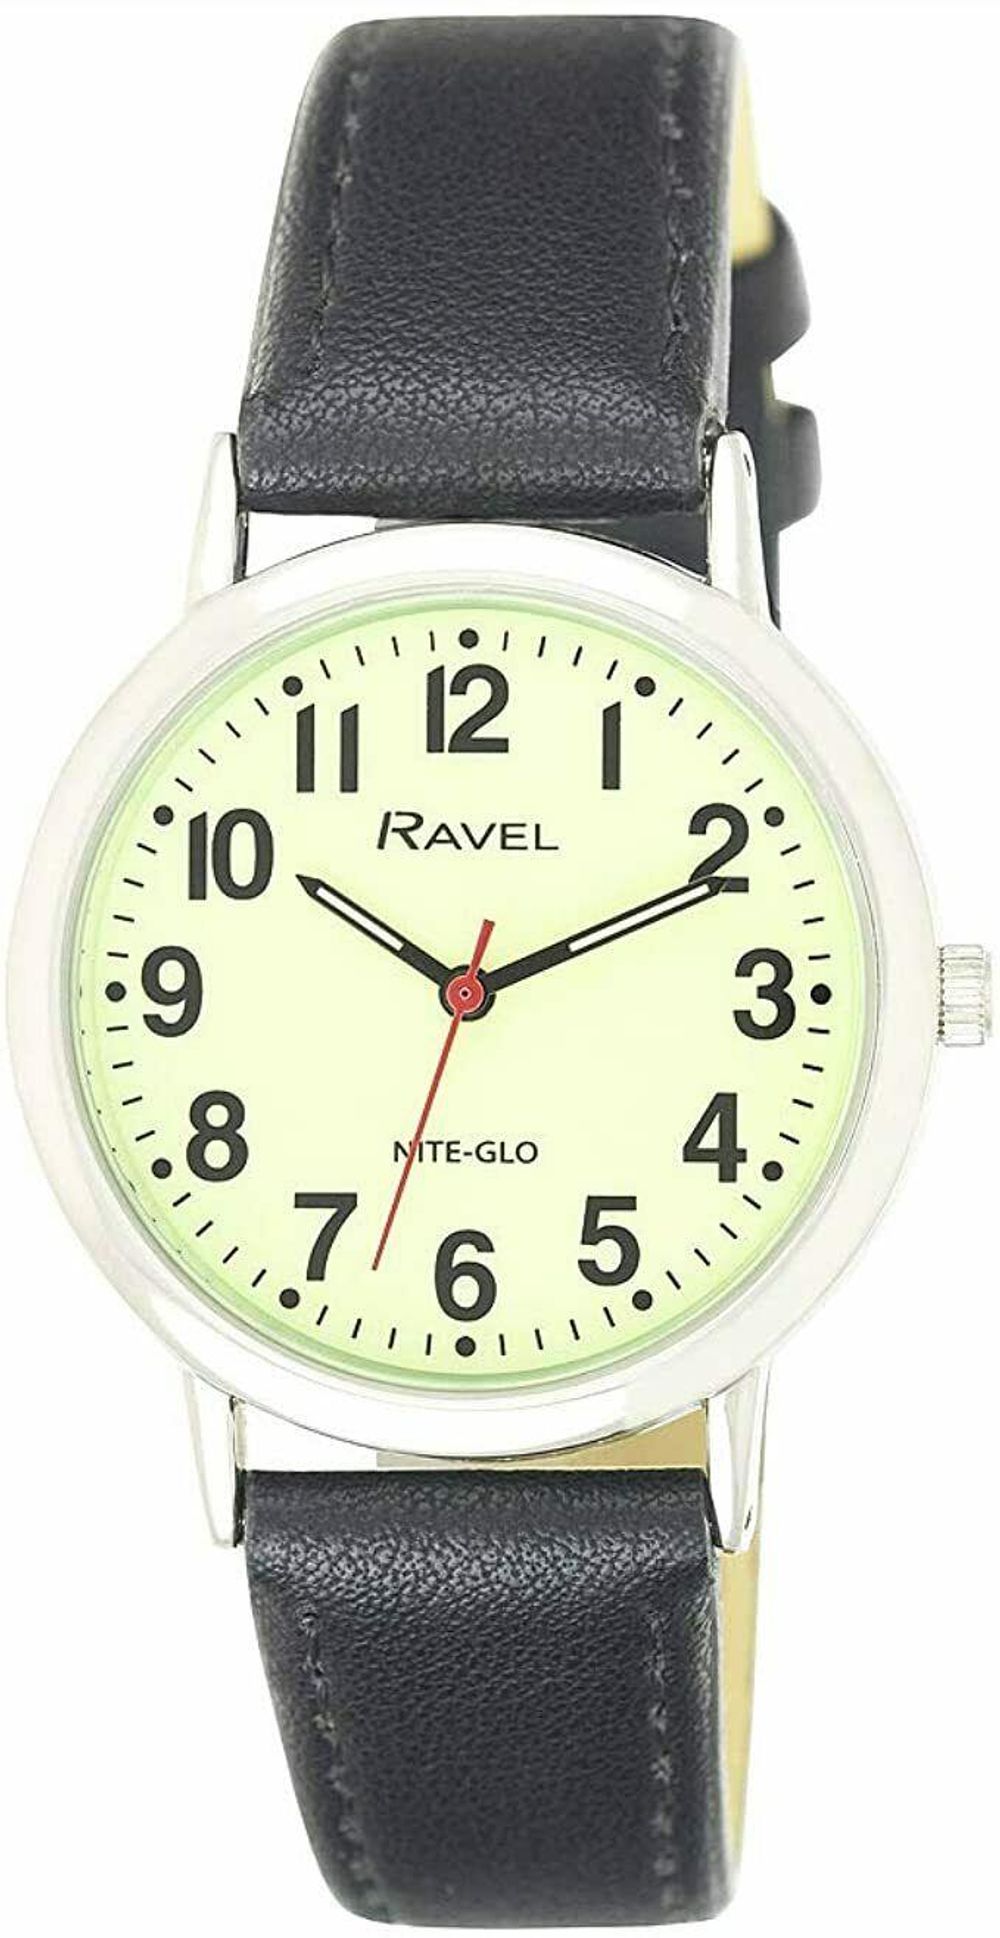 Ravel Glow in The Dark Luminous Dial Watch (Black)